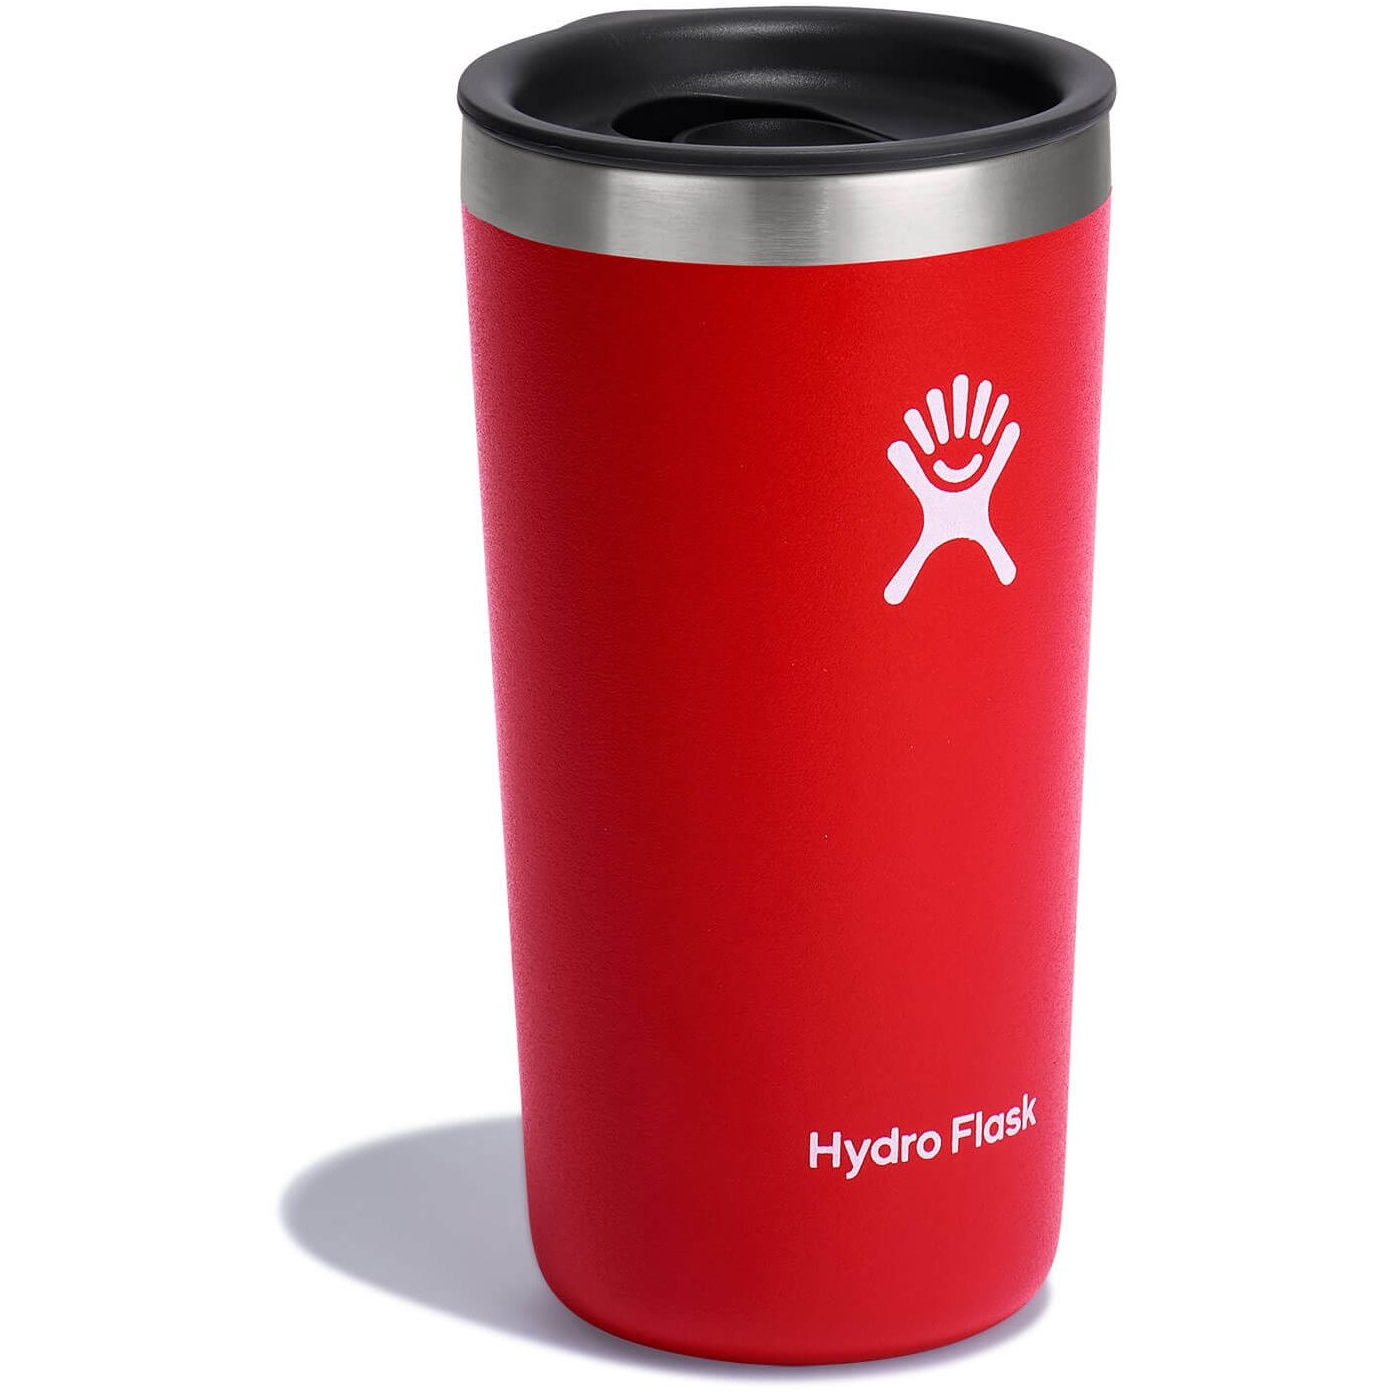 Hydro Flask 12 oz All Around Tumbler - 354ml - Goji